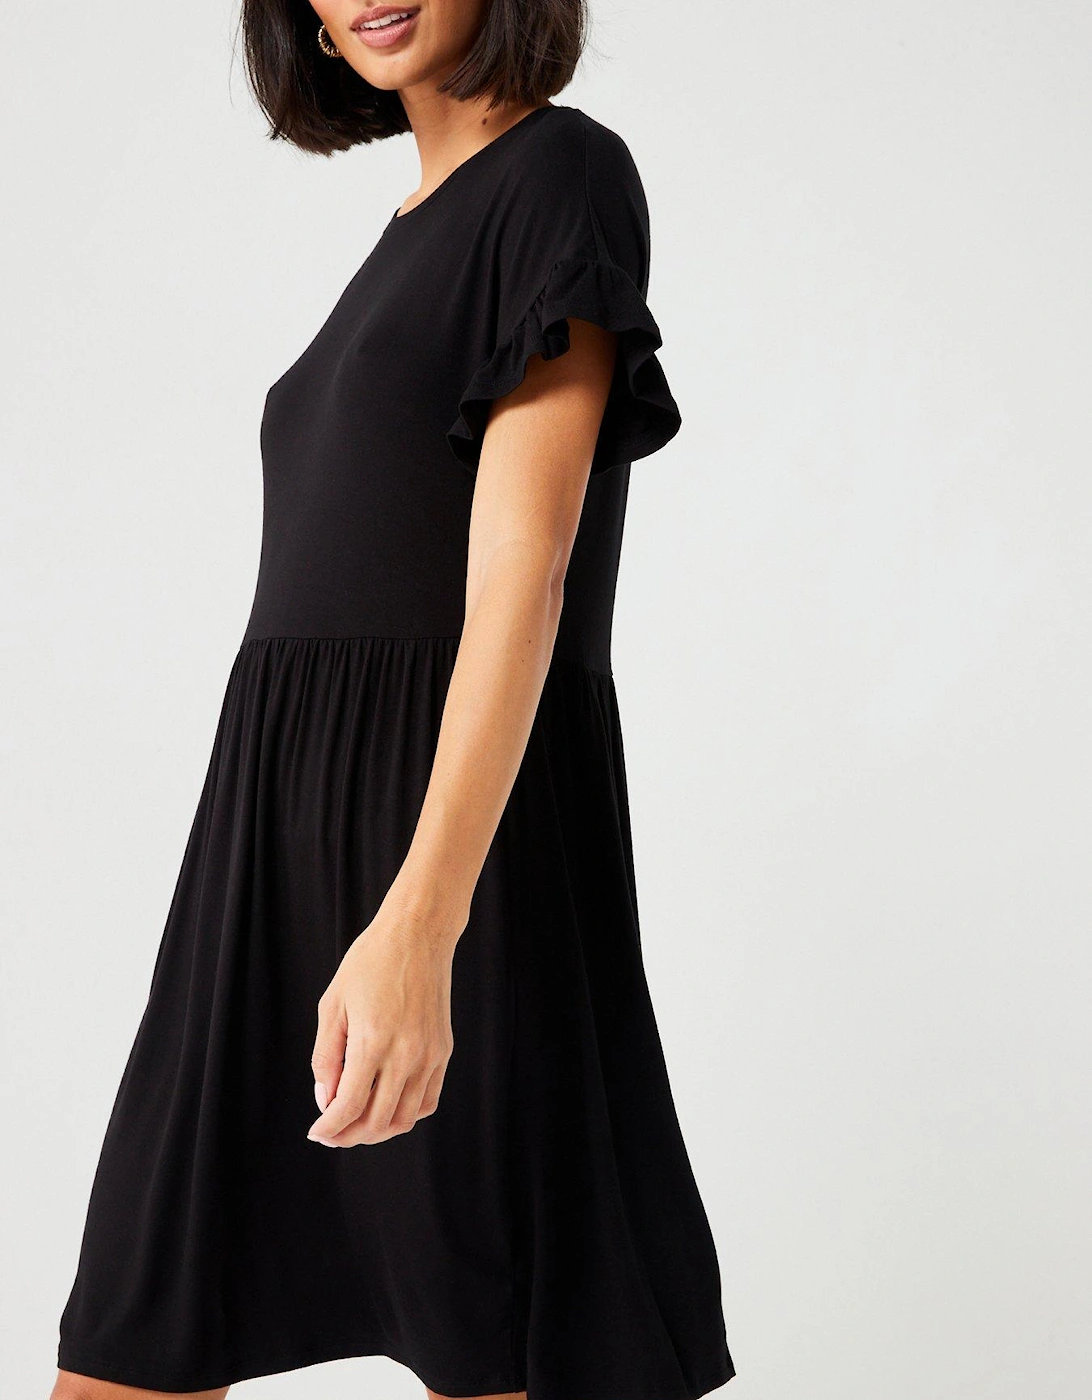 Ruffle Sleeve Mini Dress - Black